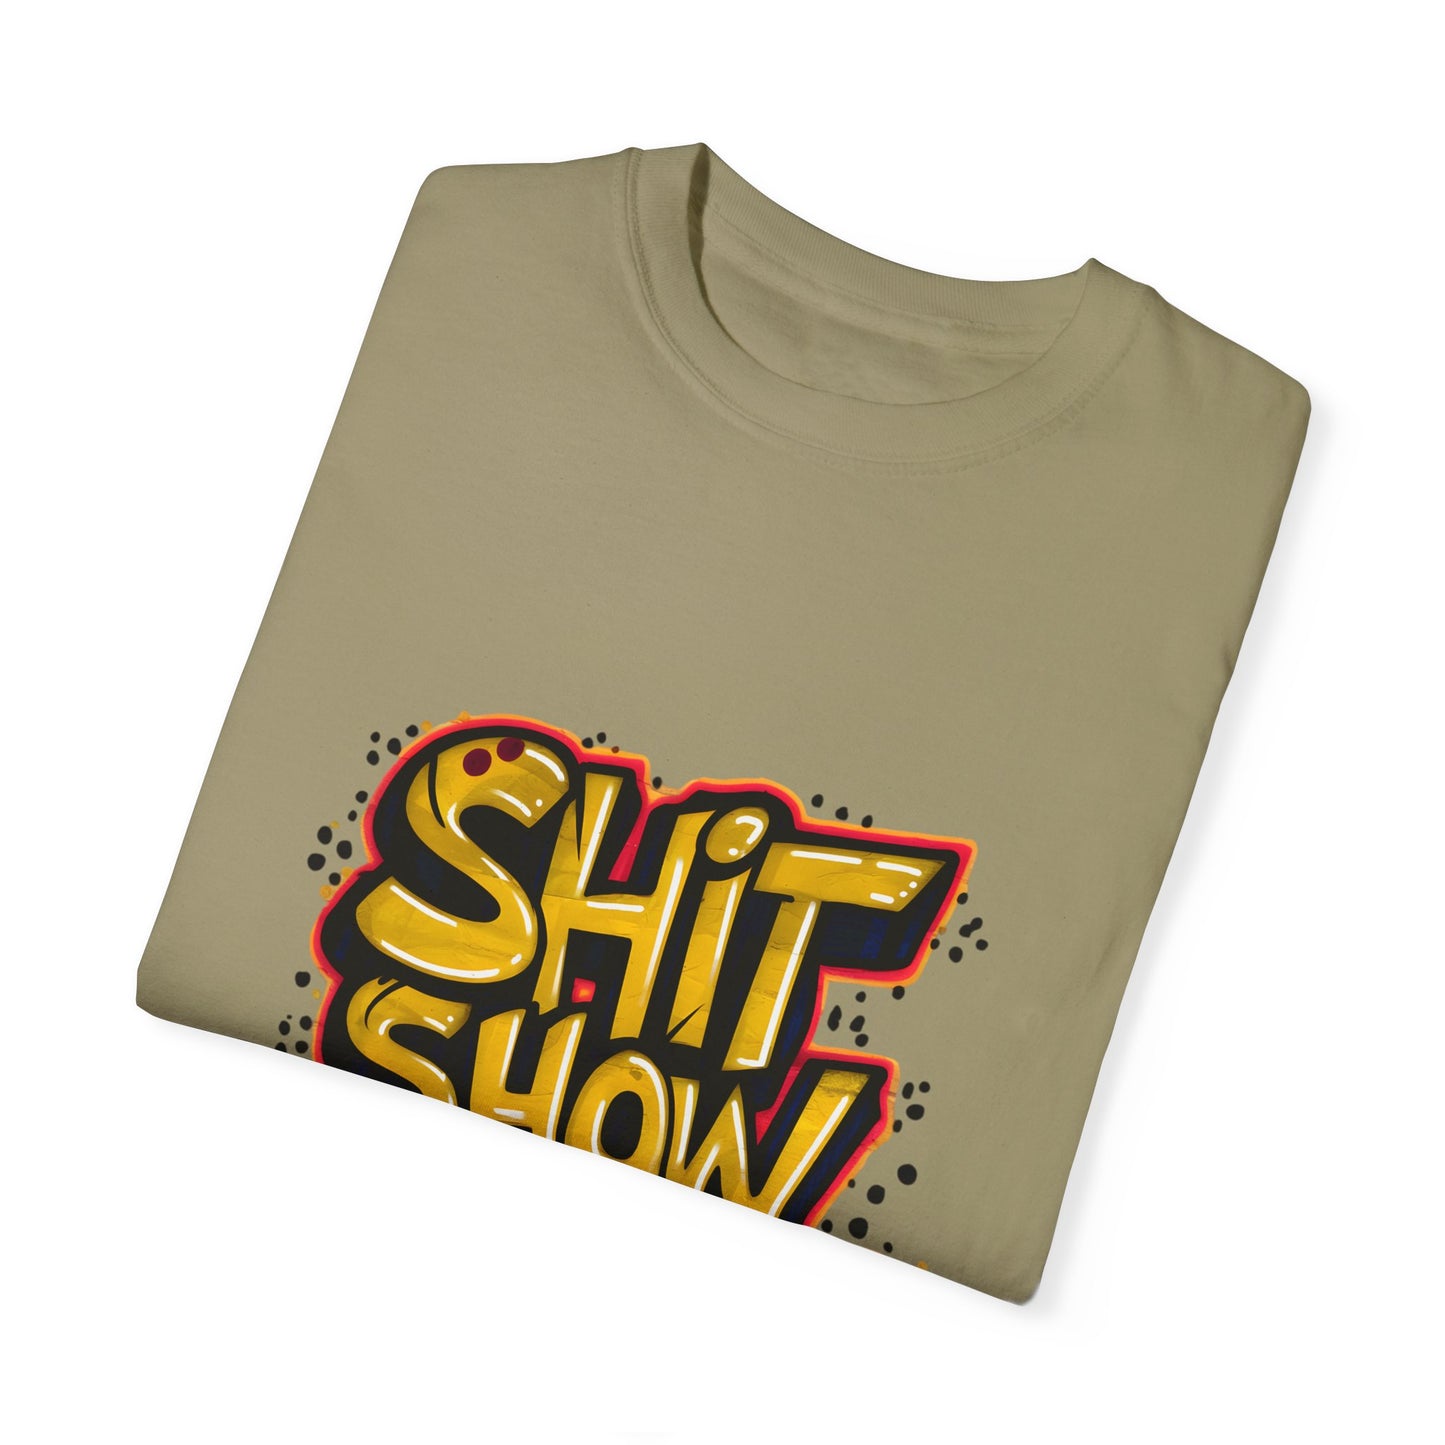 Shit Show Supervisor Urban Sarcastic Graphic Unisex Garment Dyed T-shirt Cotton Funny Humorous Graphic Soft Premium Unisex Men Women Khaki T-shirt Birthday Gift-47